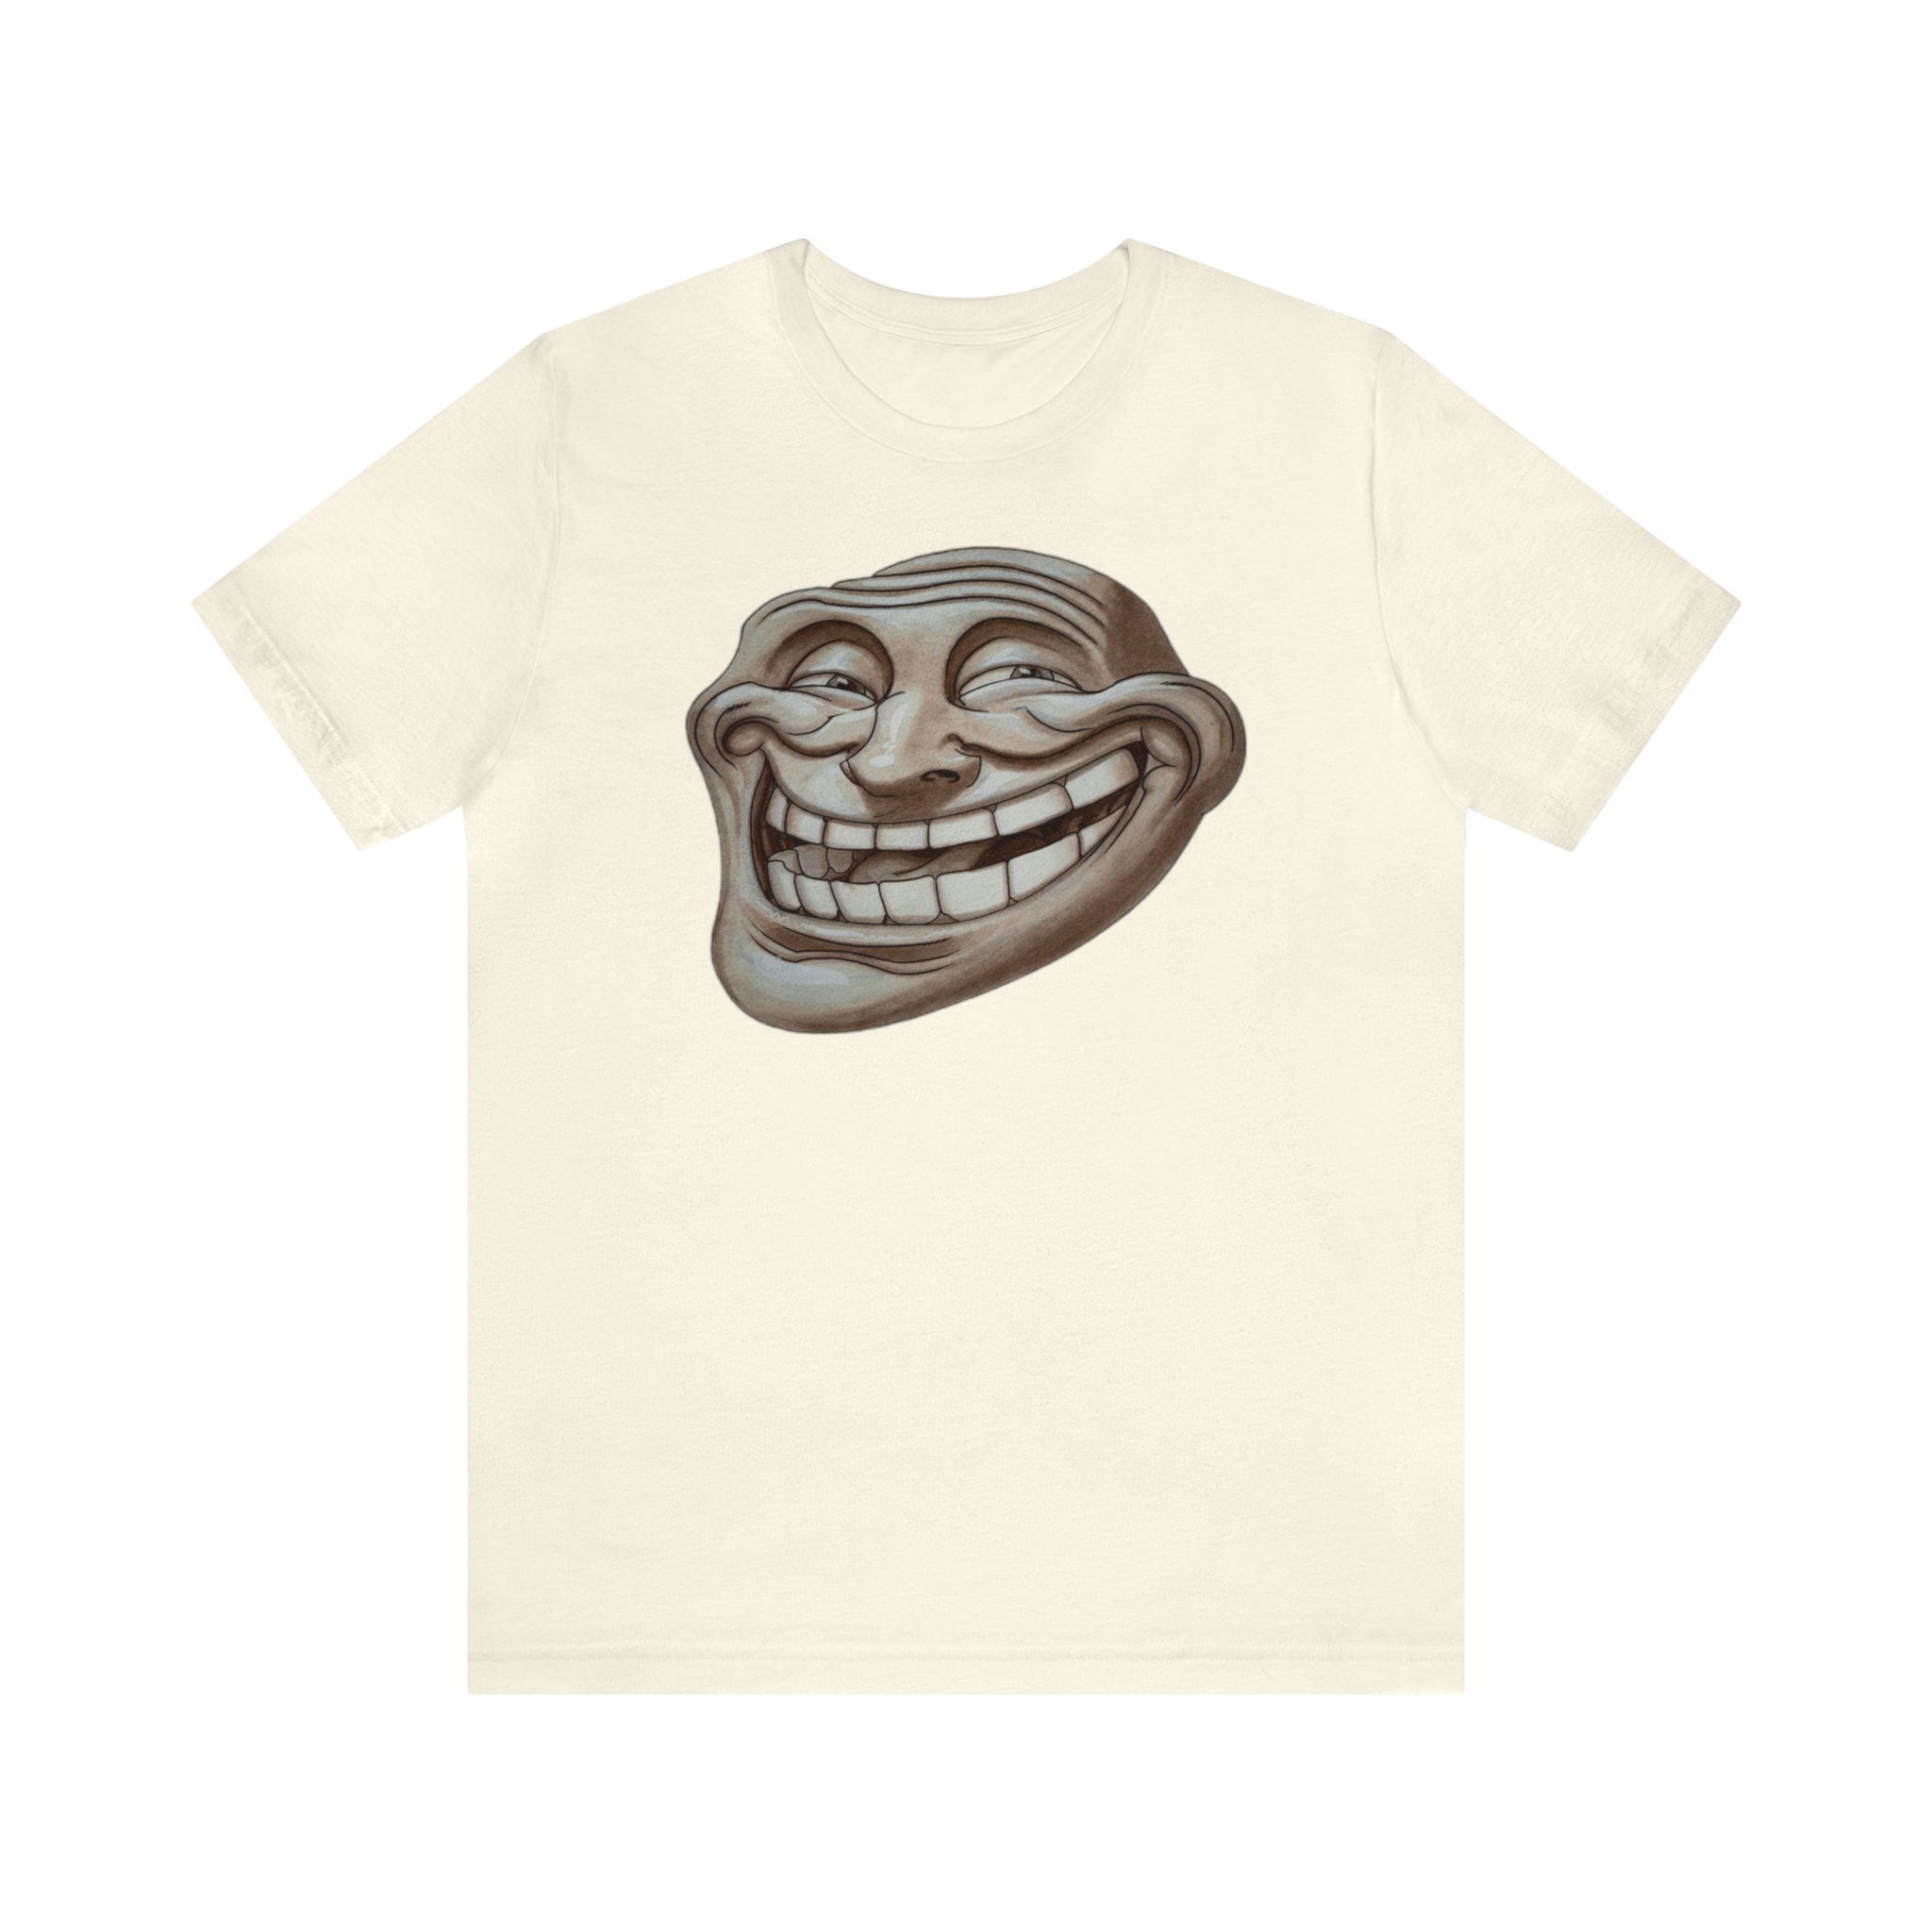 Troll Face Meme Internet Humor Joke Funny Nerd Geek Culture Mens T-shirt